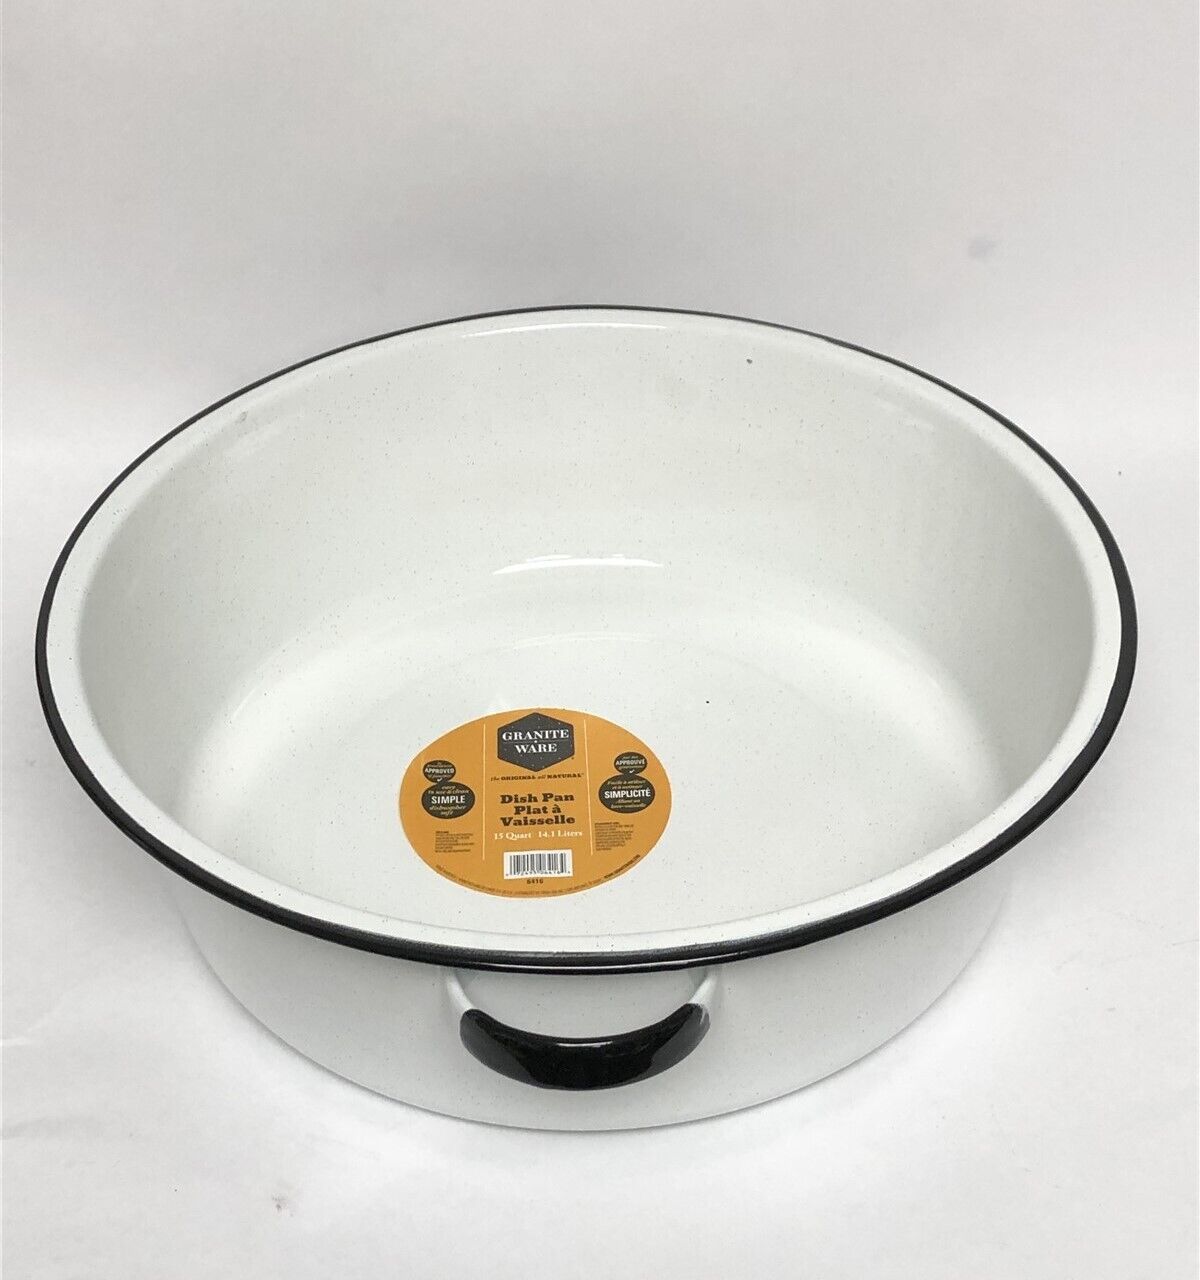 Granite Ware 6416-4 White Dish Pan- 15 Quart